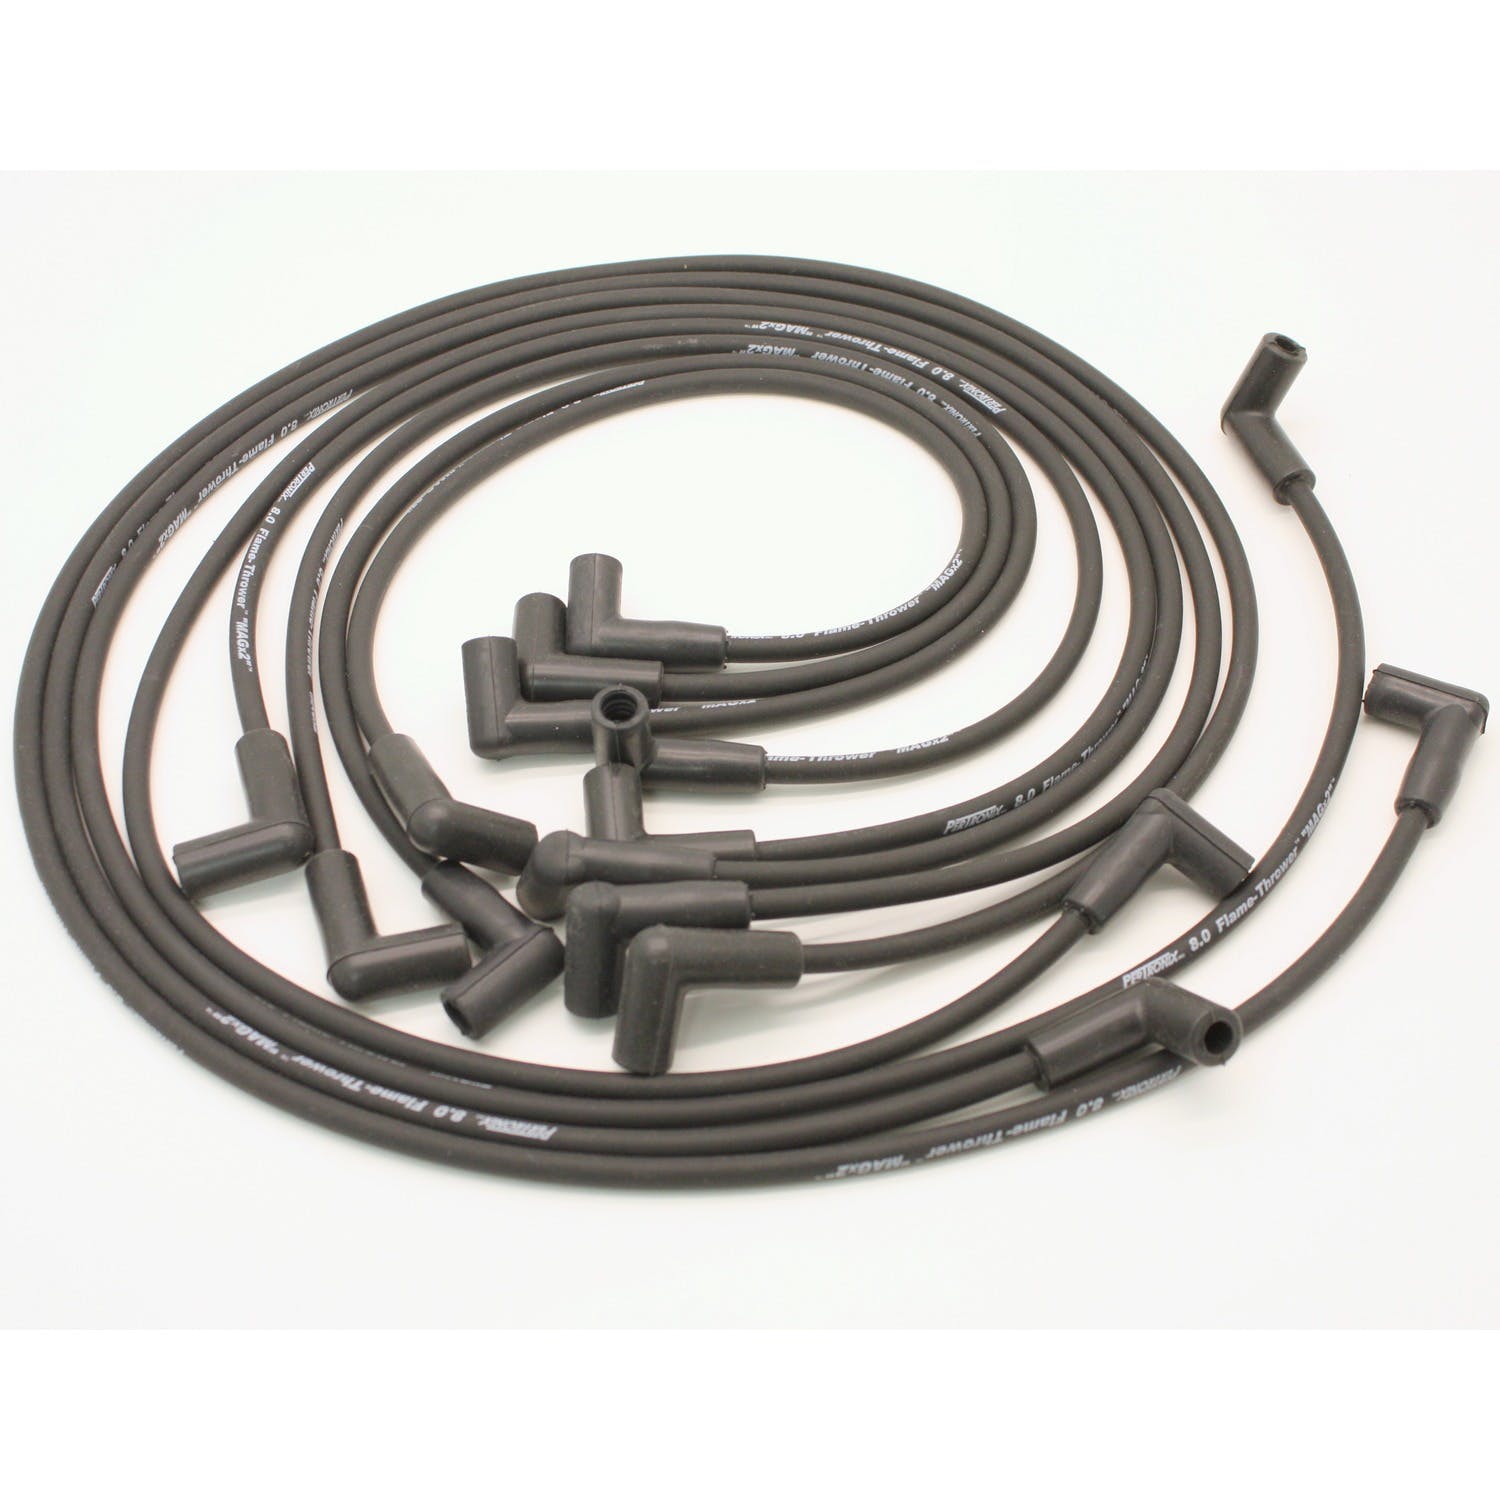 PerTronix 808213 Spark Plug Wire Set